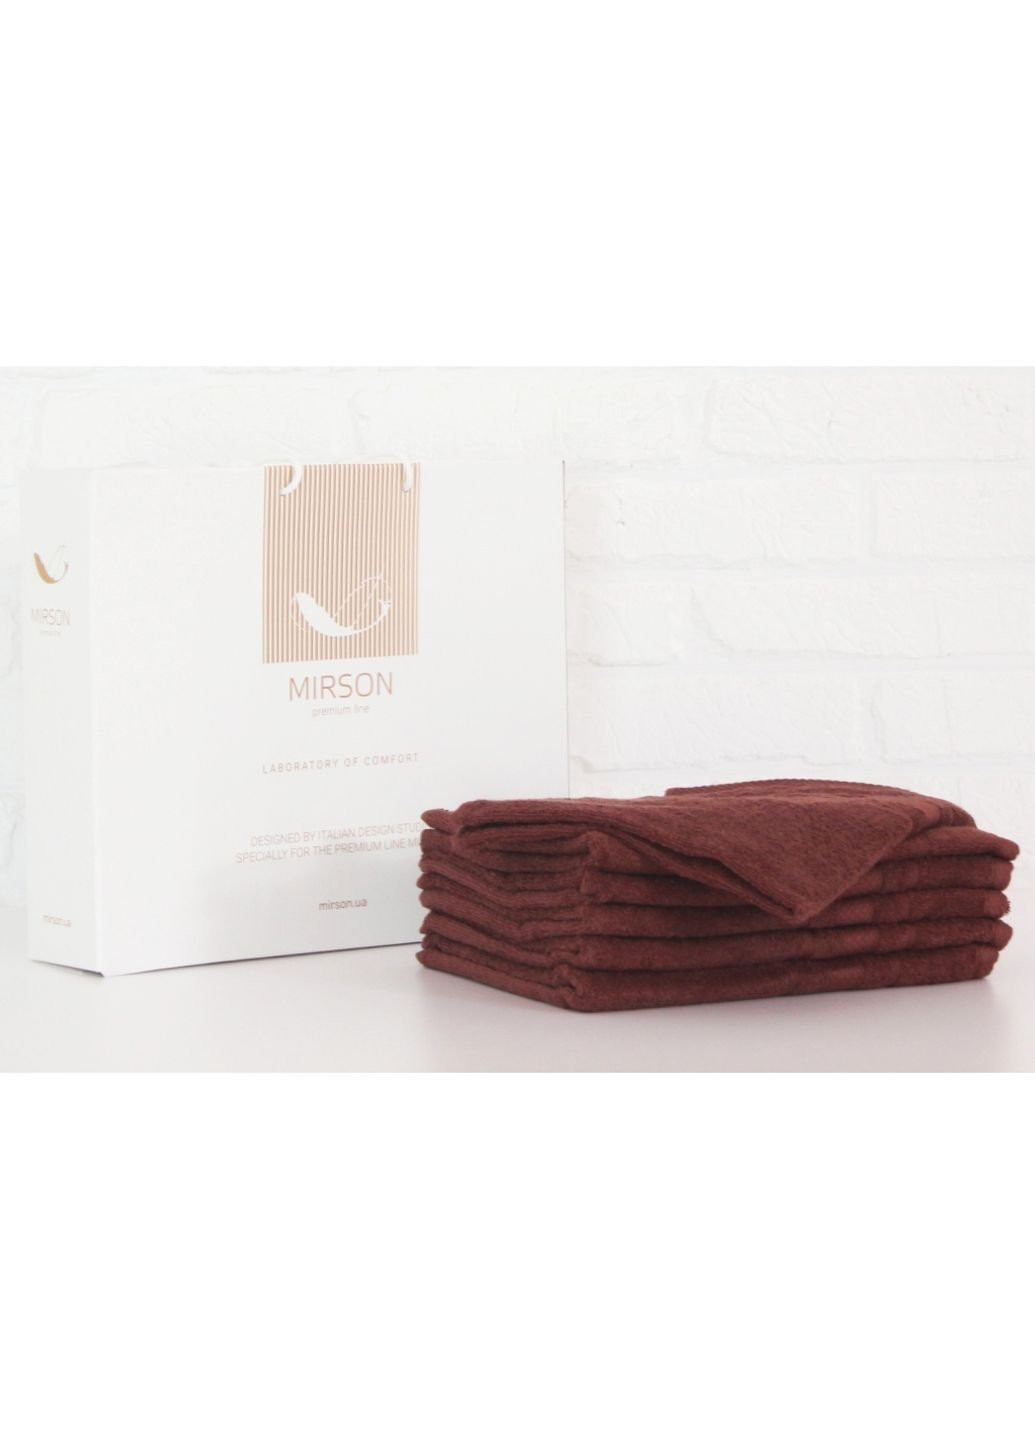 No Brand полотенце mirson набор банный №5071 elite softness brown 70х140 6 шт (2200003524116) коричневый производство - Украина